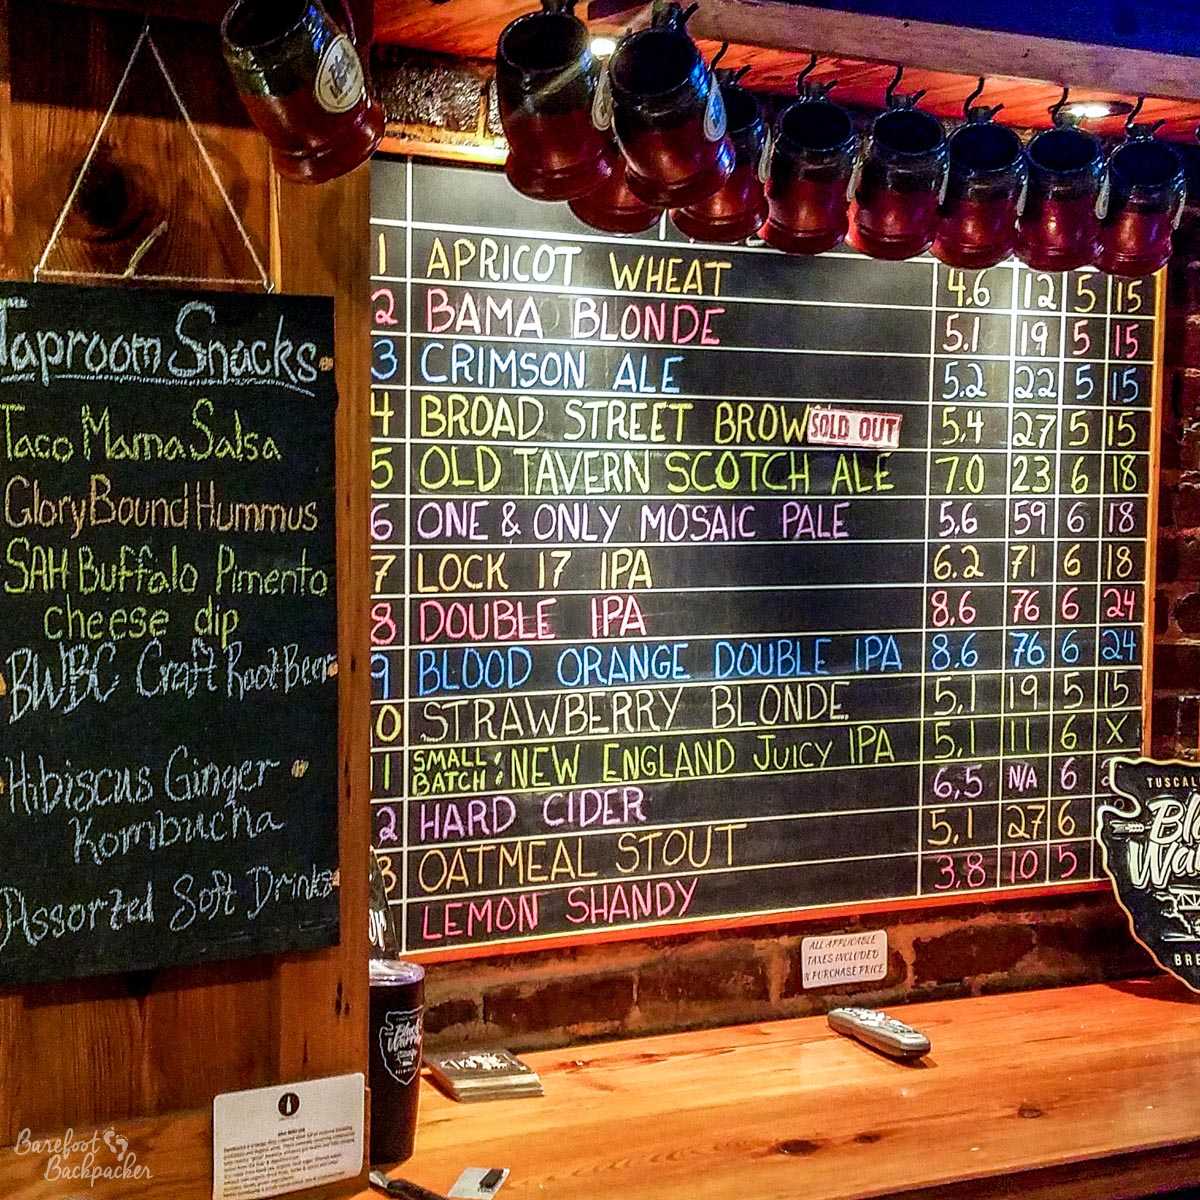 List of beers at Black Warrior Brewery, Tuscaloosa AL